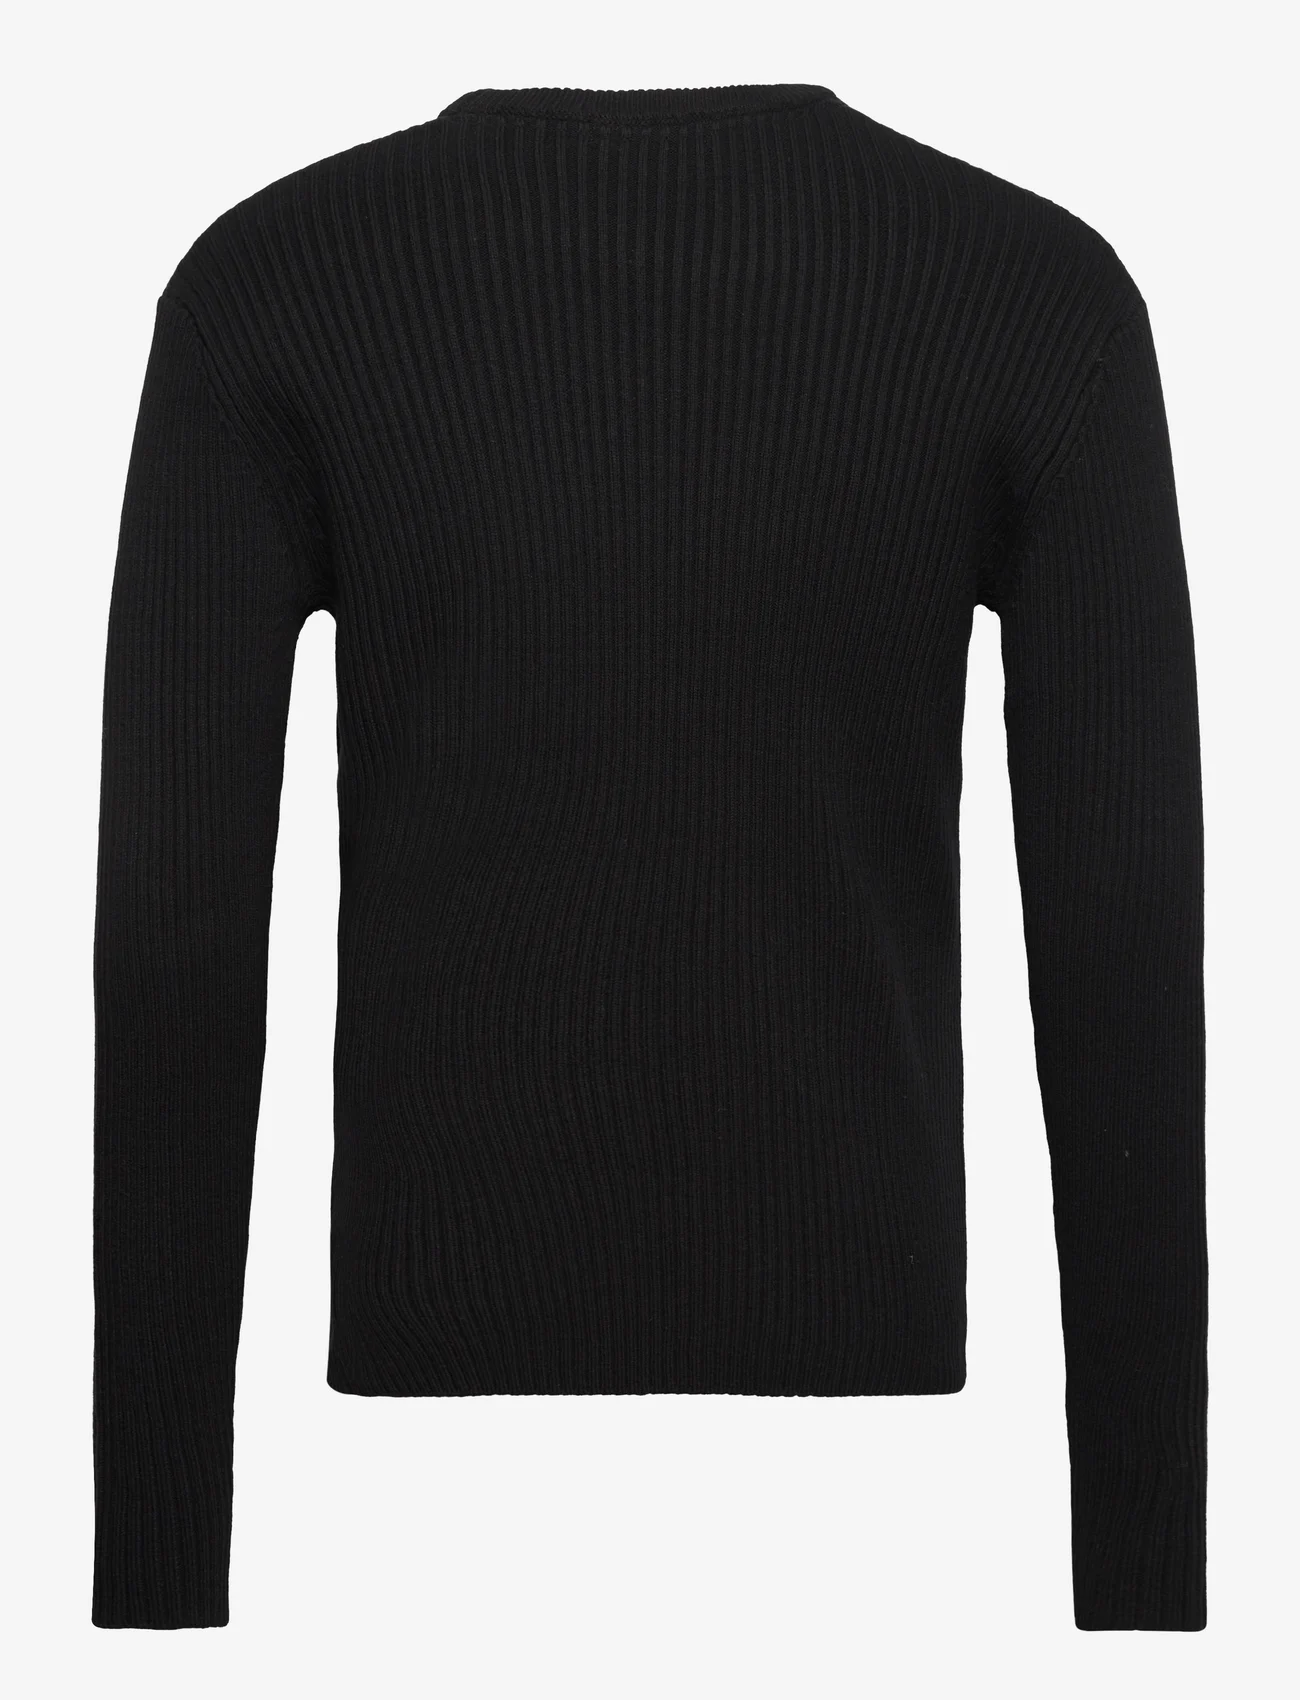 Bruuns Bazaar - SimBBBenny crew neck knit - Ümmarguse kaelusega kudumid - black - 1